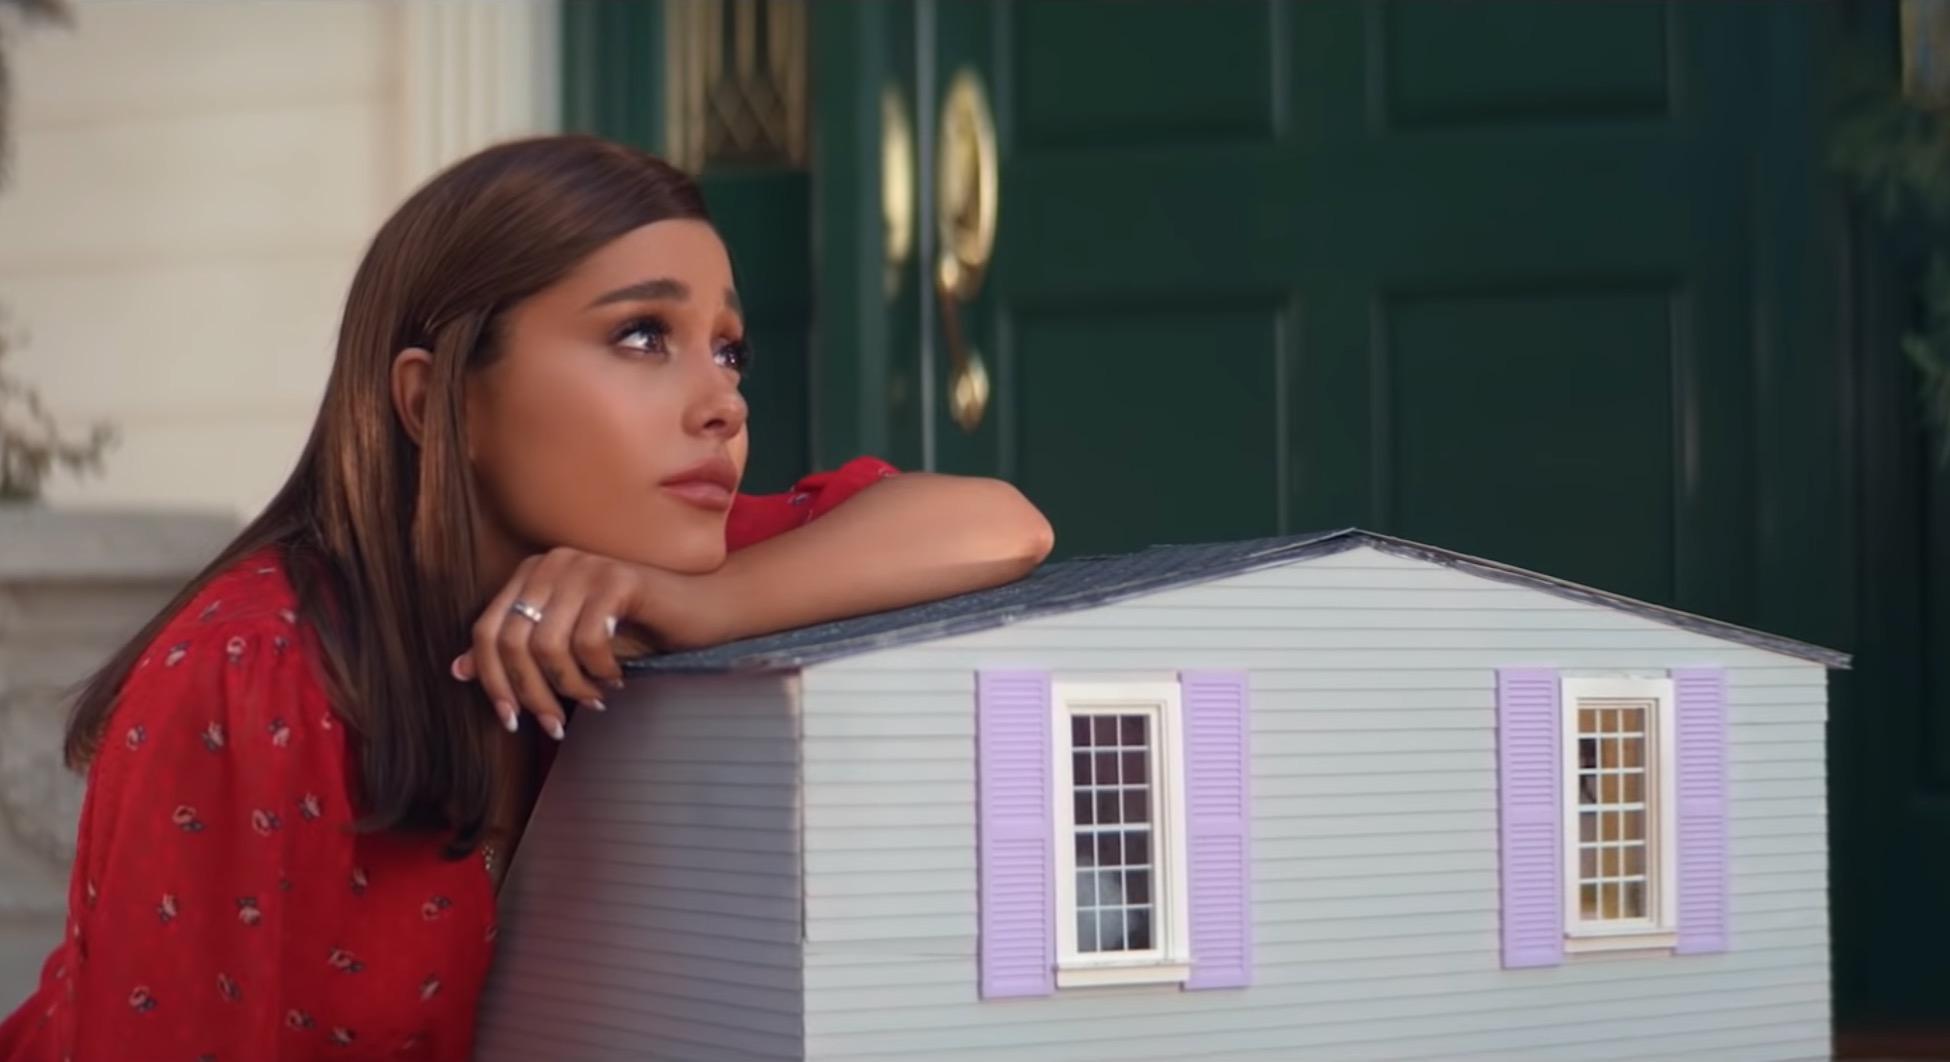 Ariana Grande's 'thank u, next' music video breaks YouTube